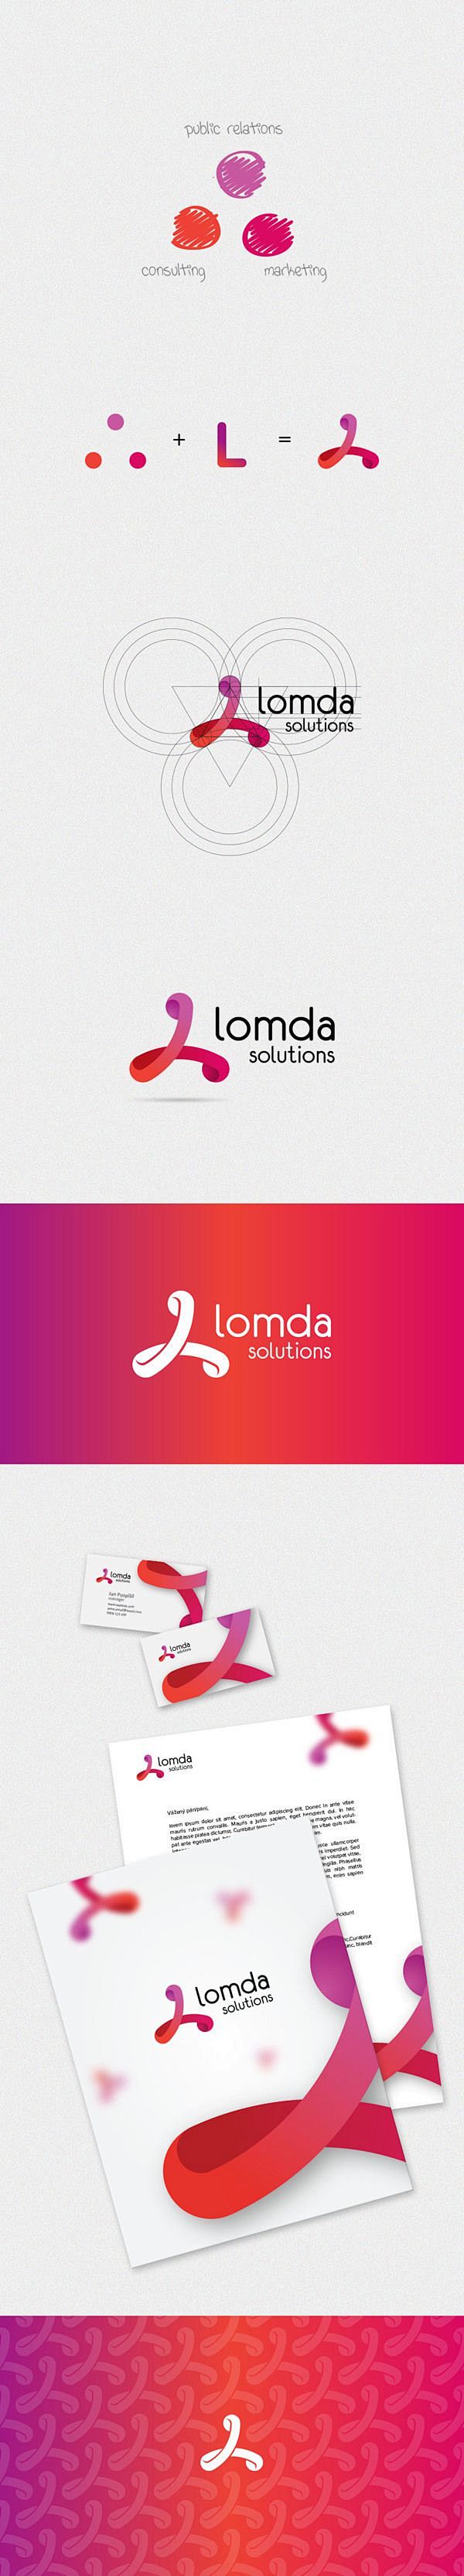 lomda Logo Design